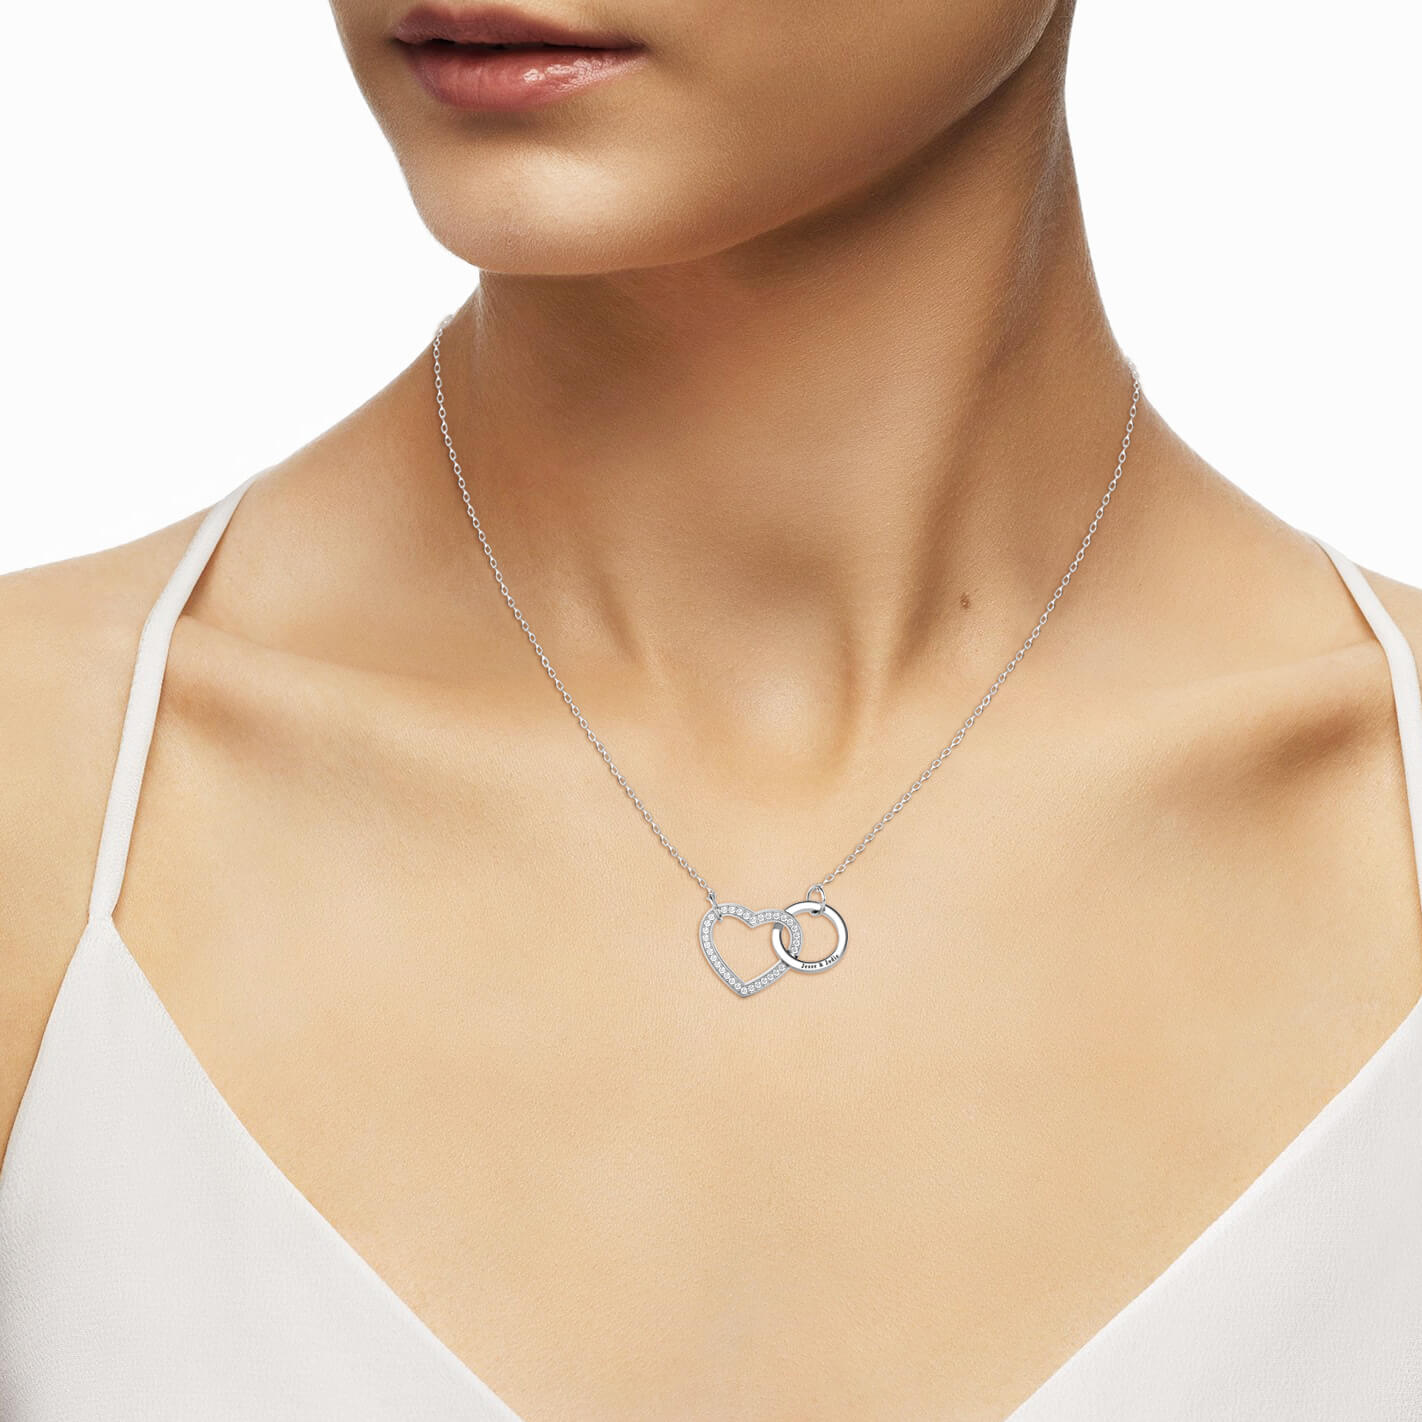 Personalised Engraved Interlocking Necklace